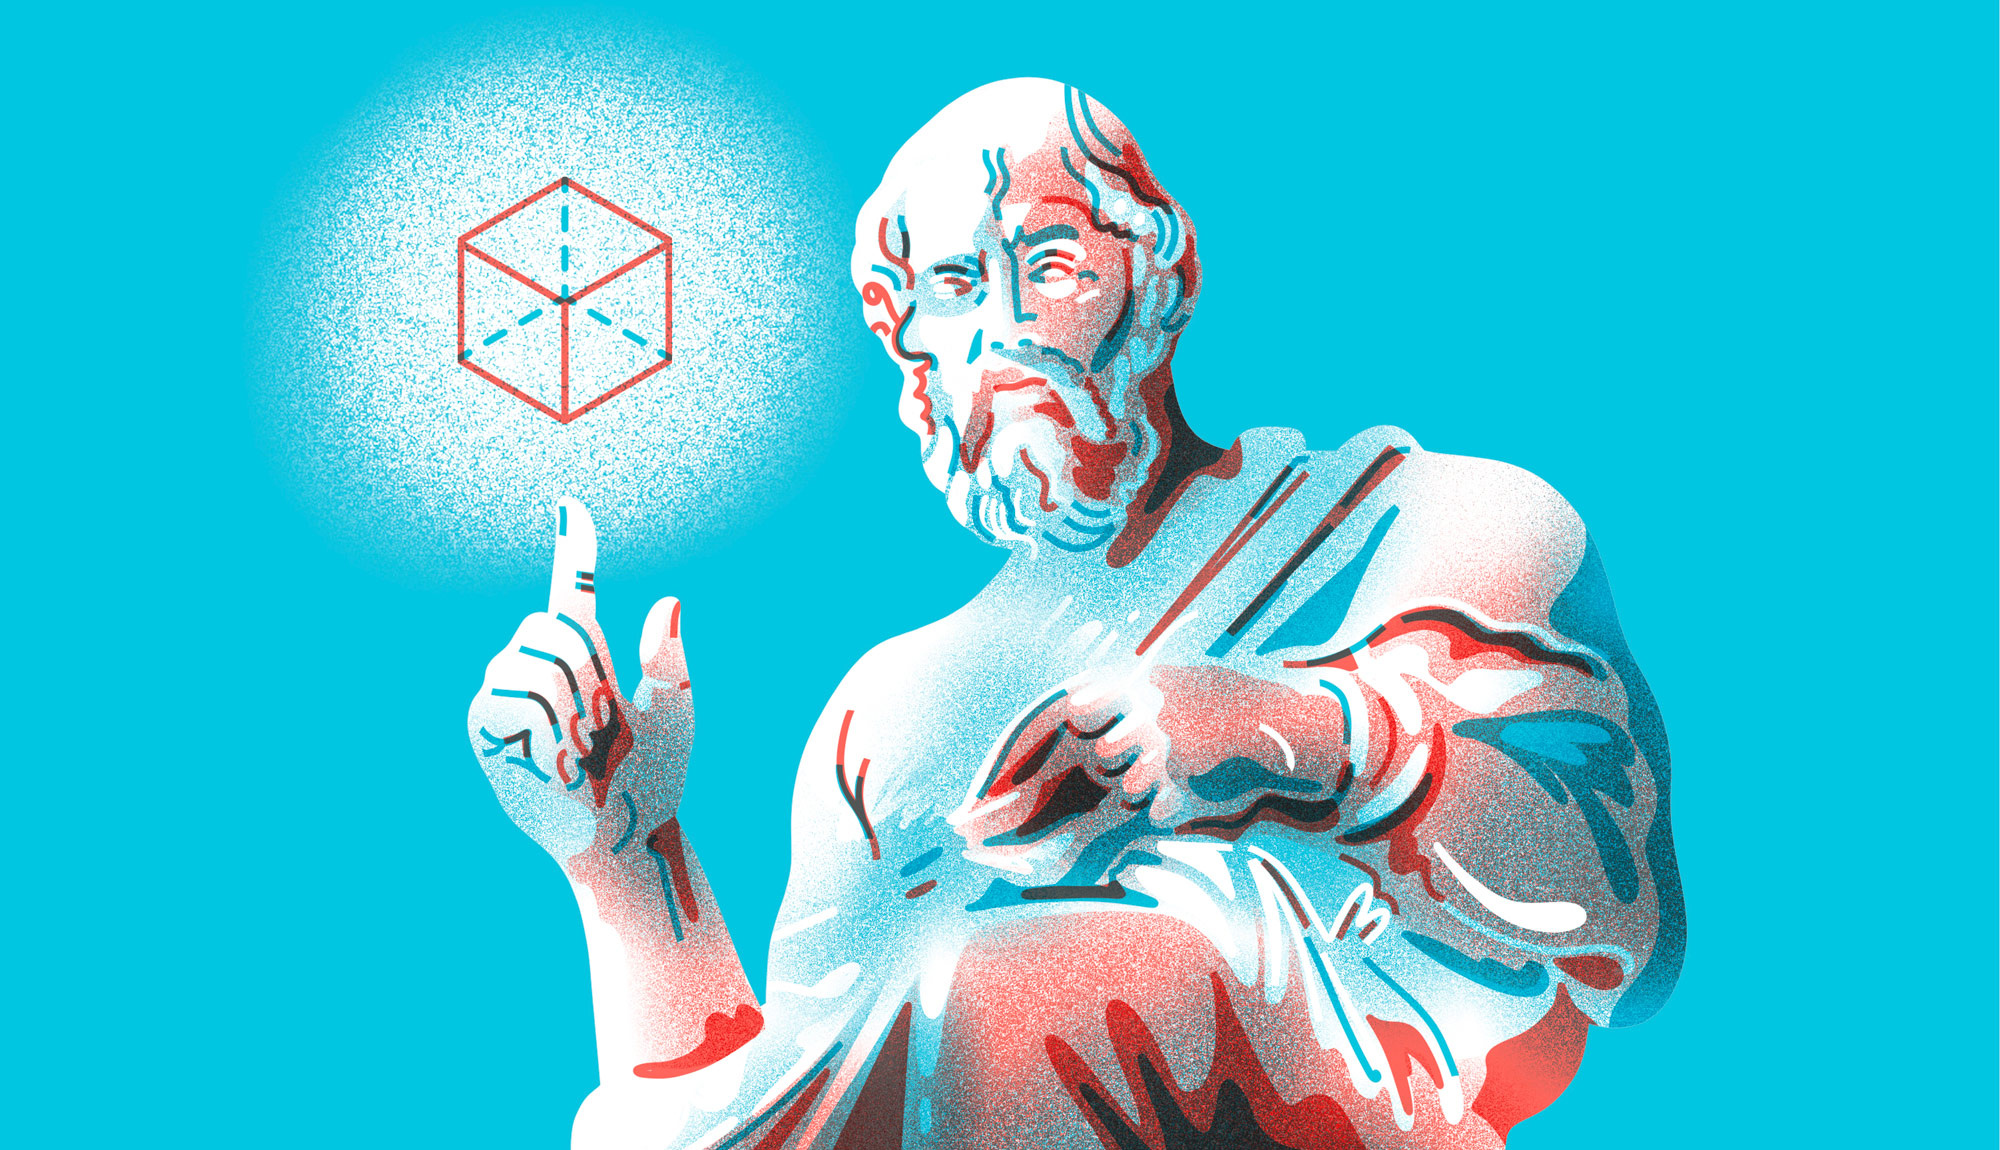 Plato, Earth made of cubes, Omnia, 2000x1150 HD Desktop